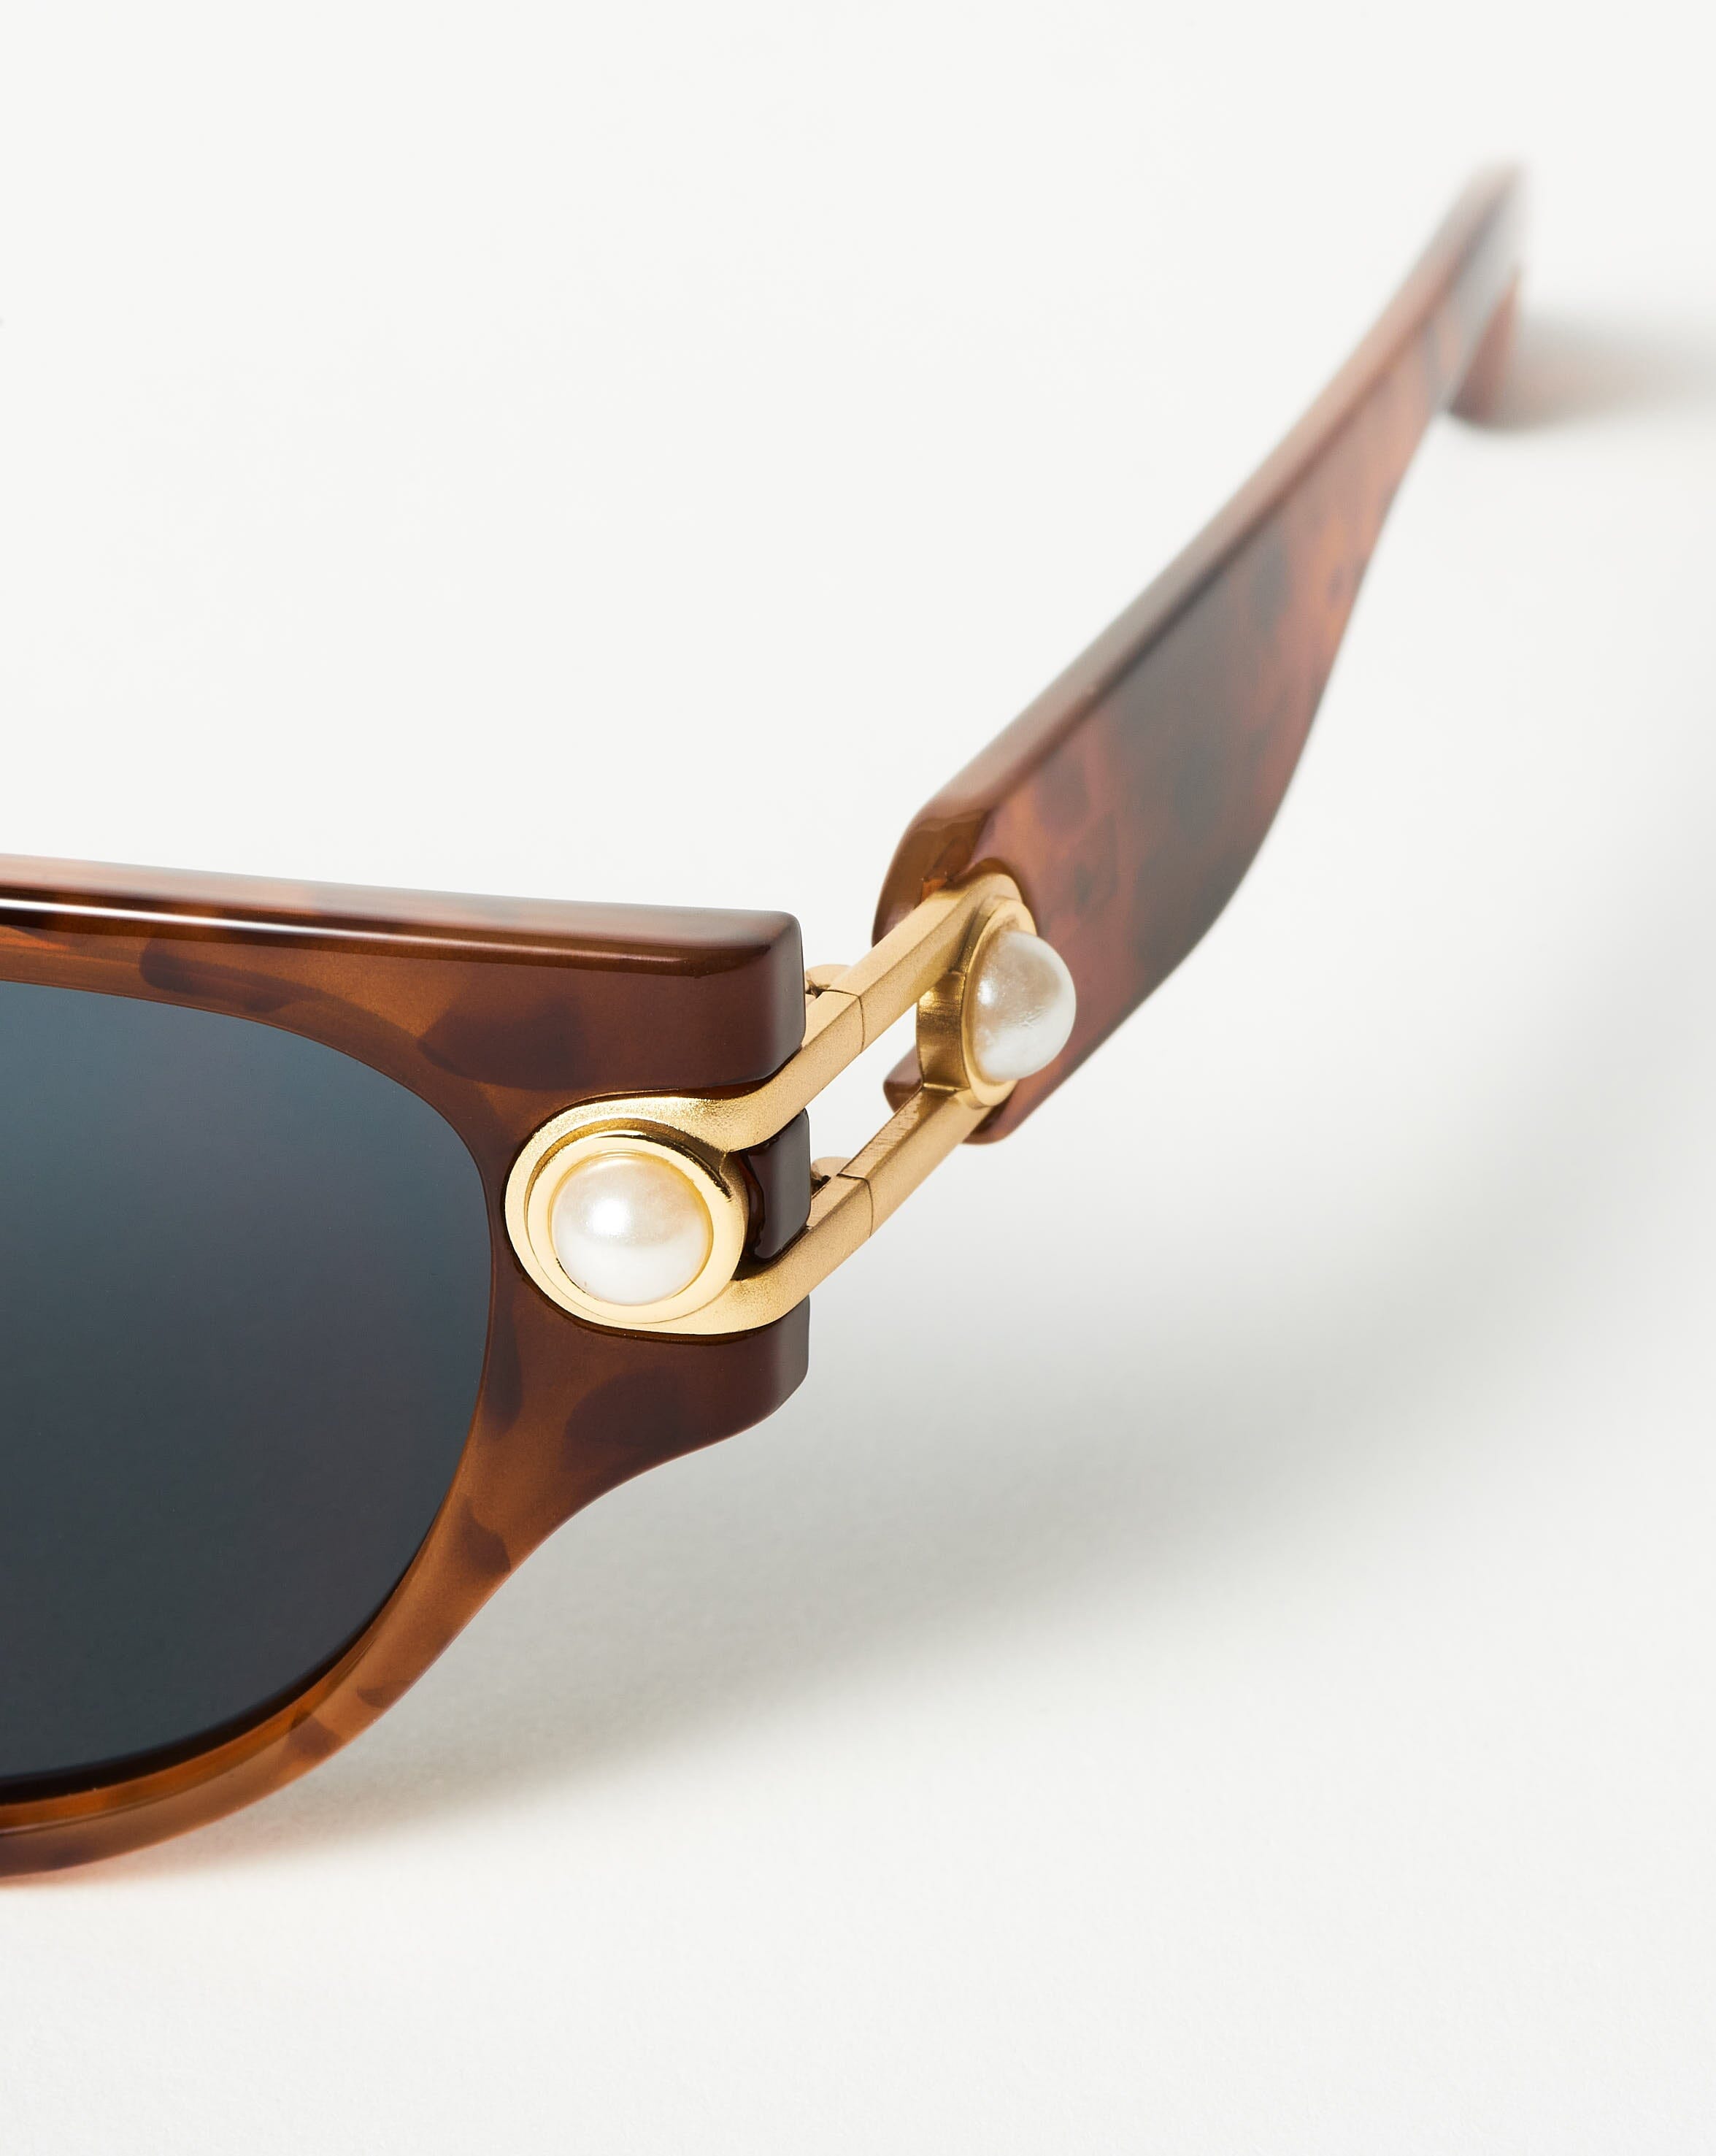 Le Specs Serpens Link Cat-Eye Sunglasses | Tortoiseshell/Pearl Accessories Missoma 